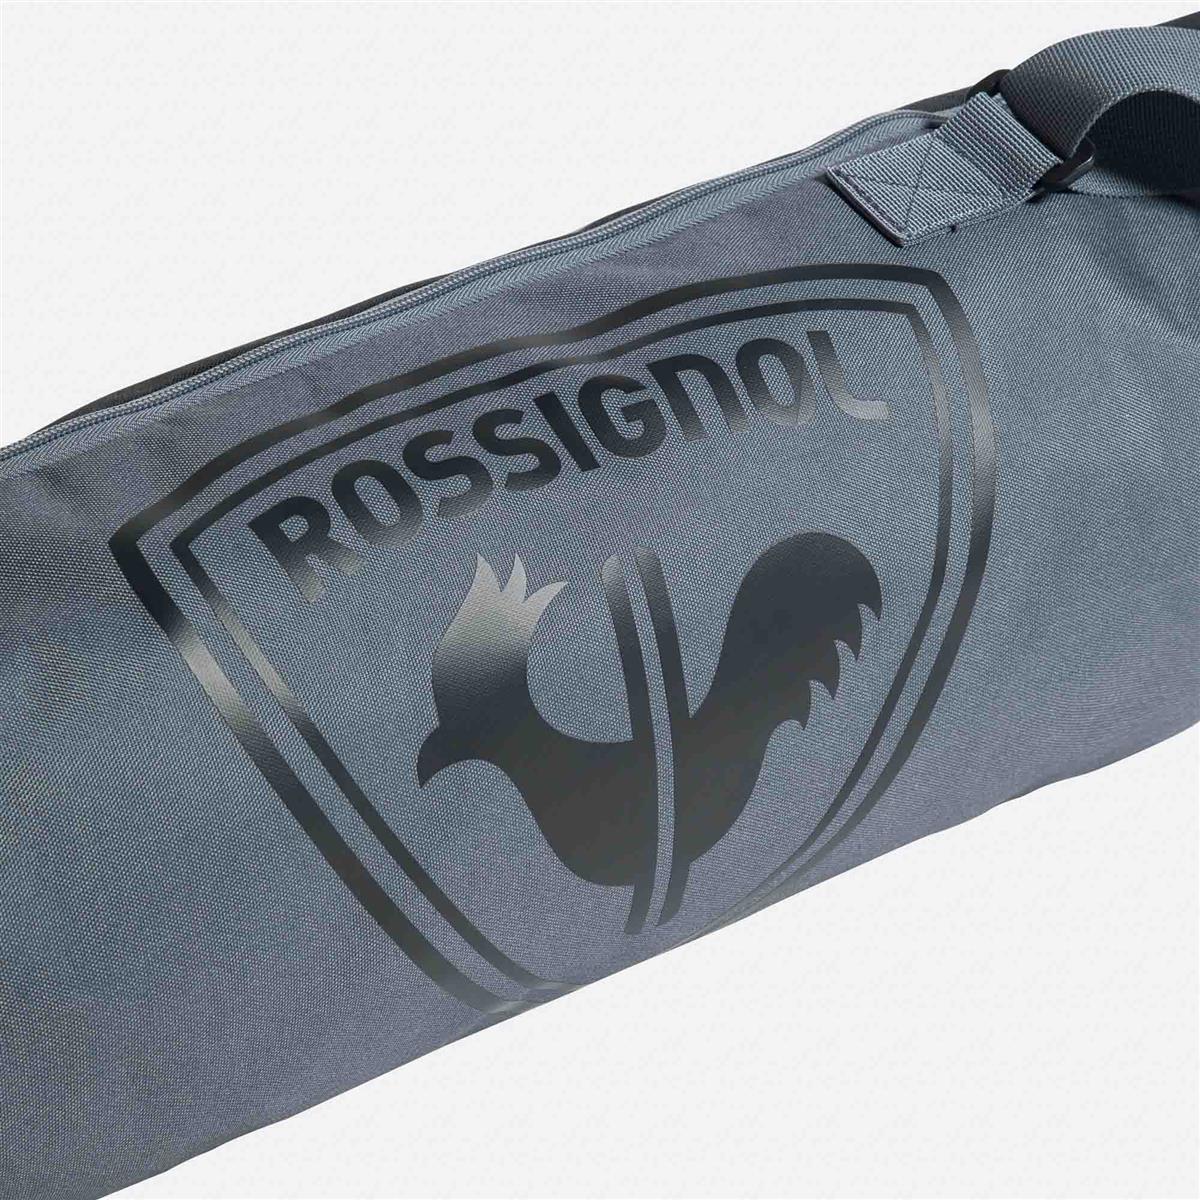 Rossignol Tactic Ski Bag EX SHT 140-180